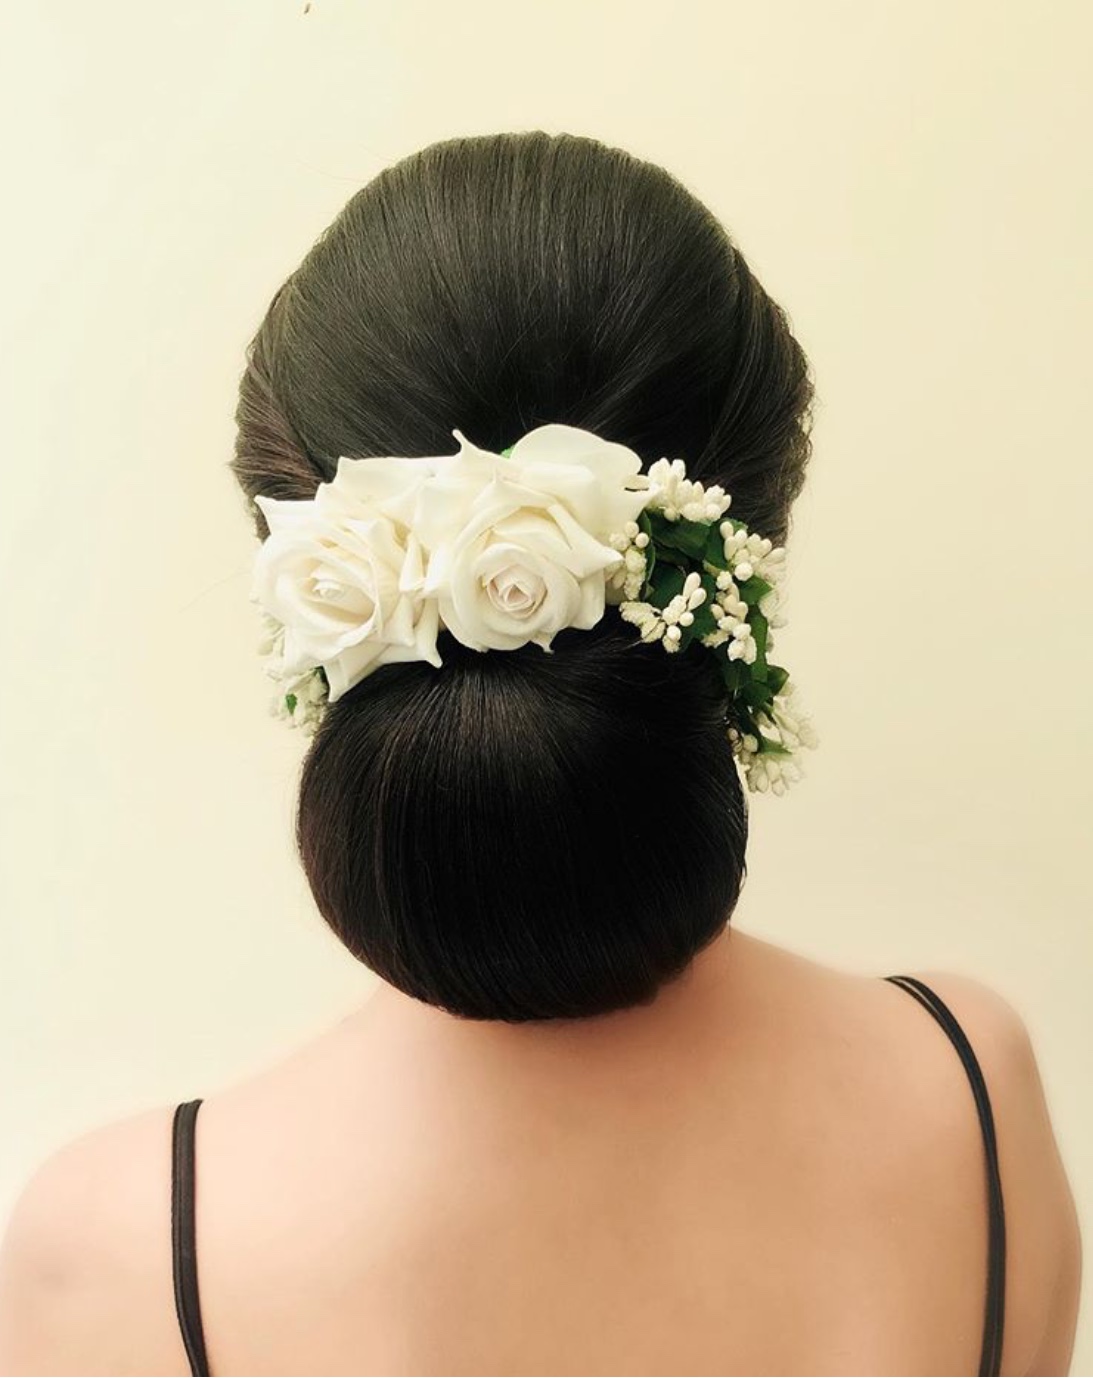 Bun hairstyles for brides